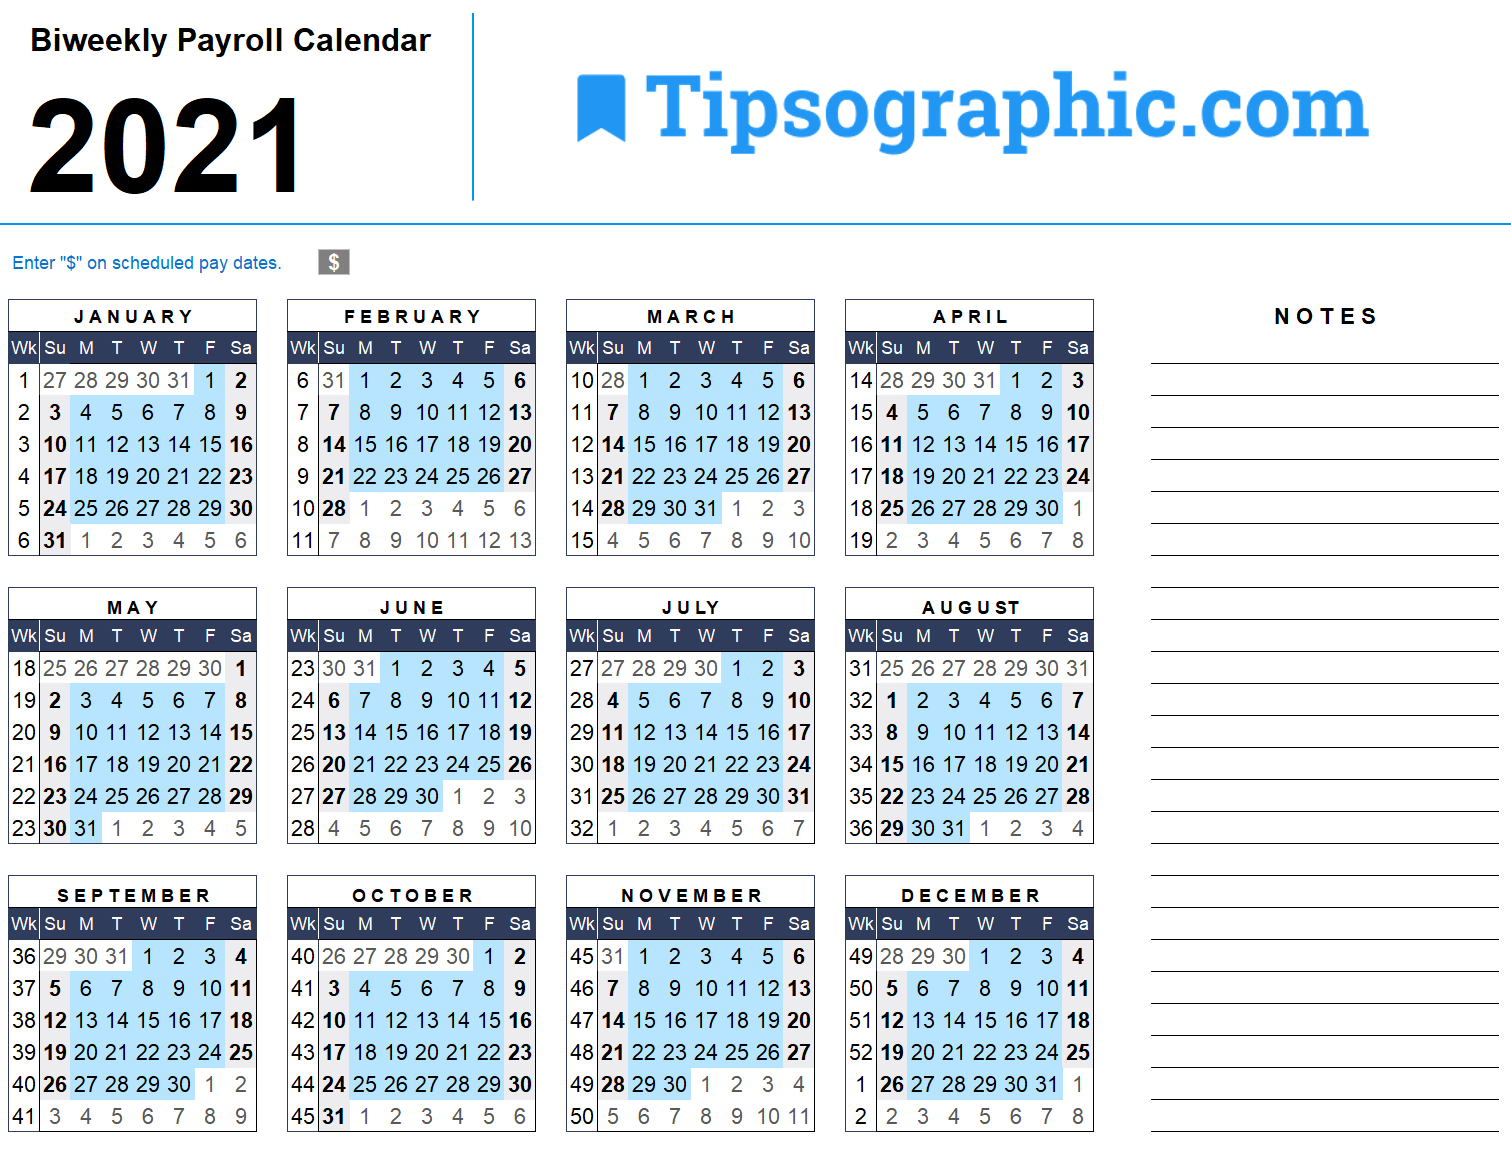 Download The 2021 Biweekly Payroll Calendar | Tipsographic-Printable Employee Calendar 2021